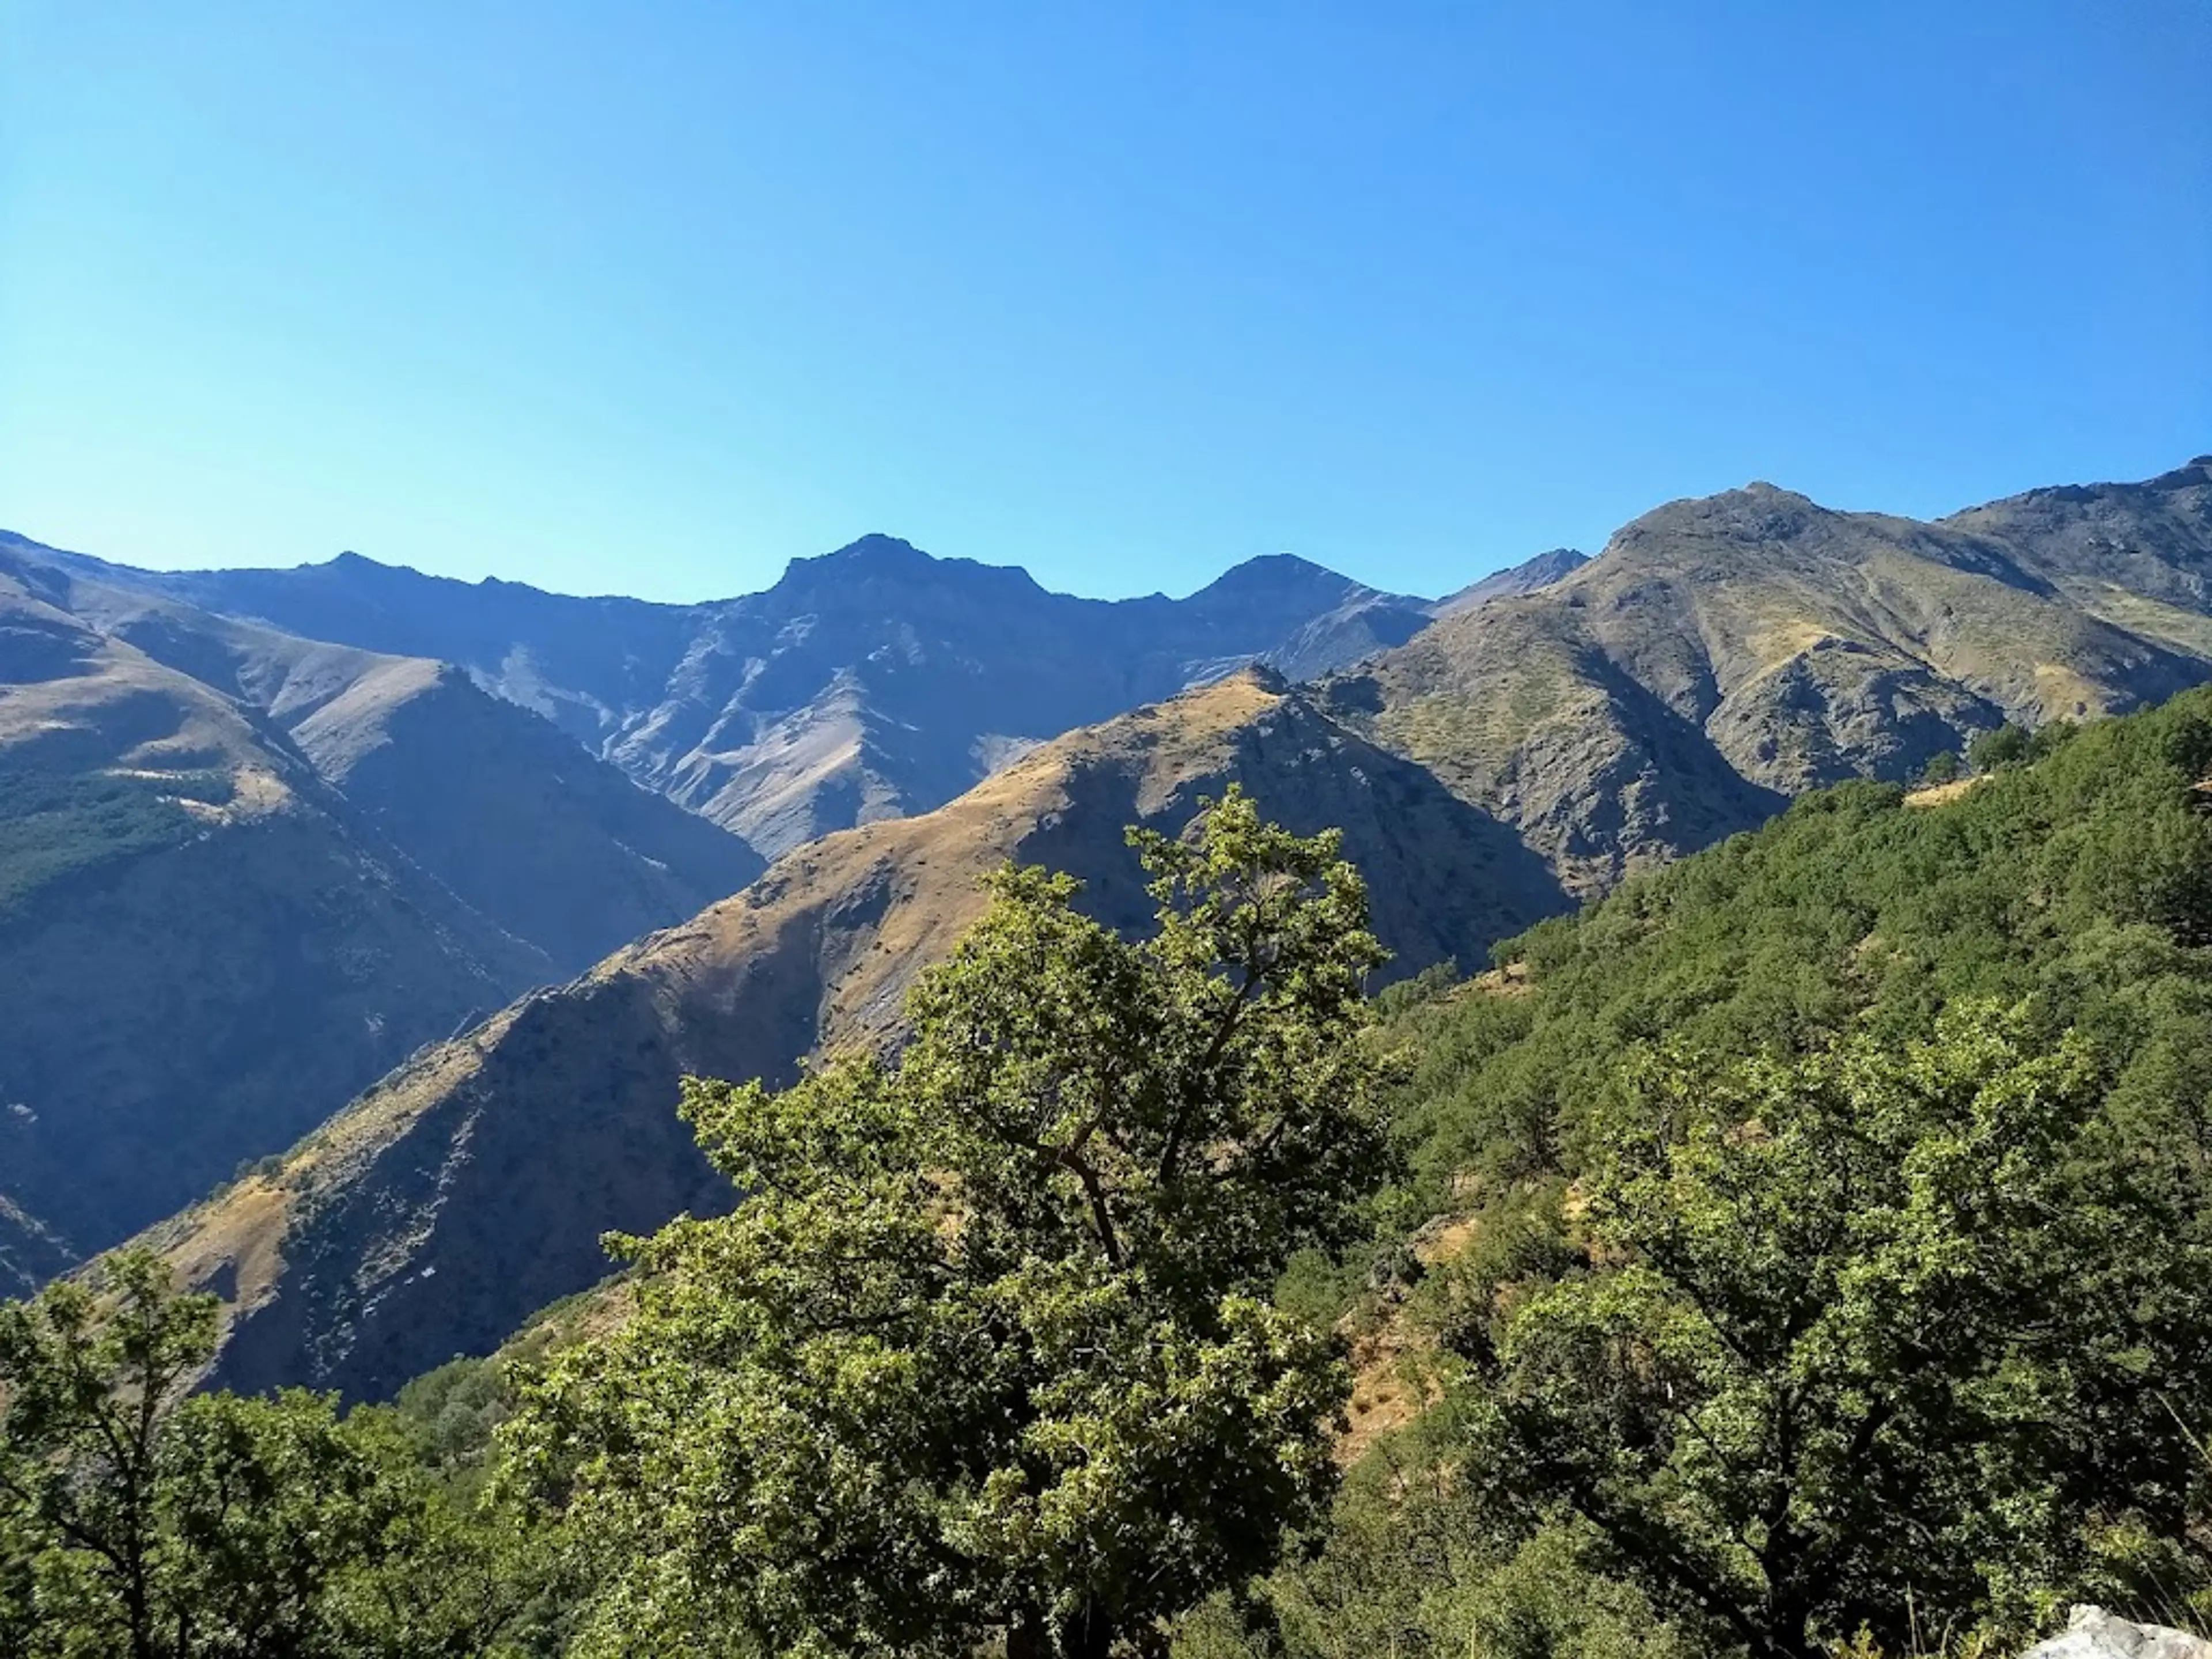 Sierra Nevada National Park